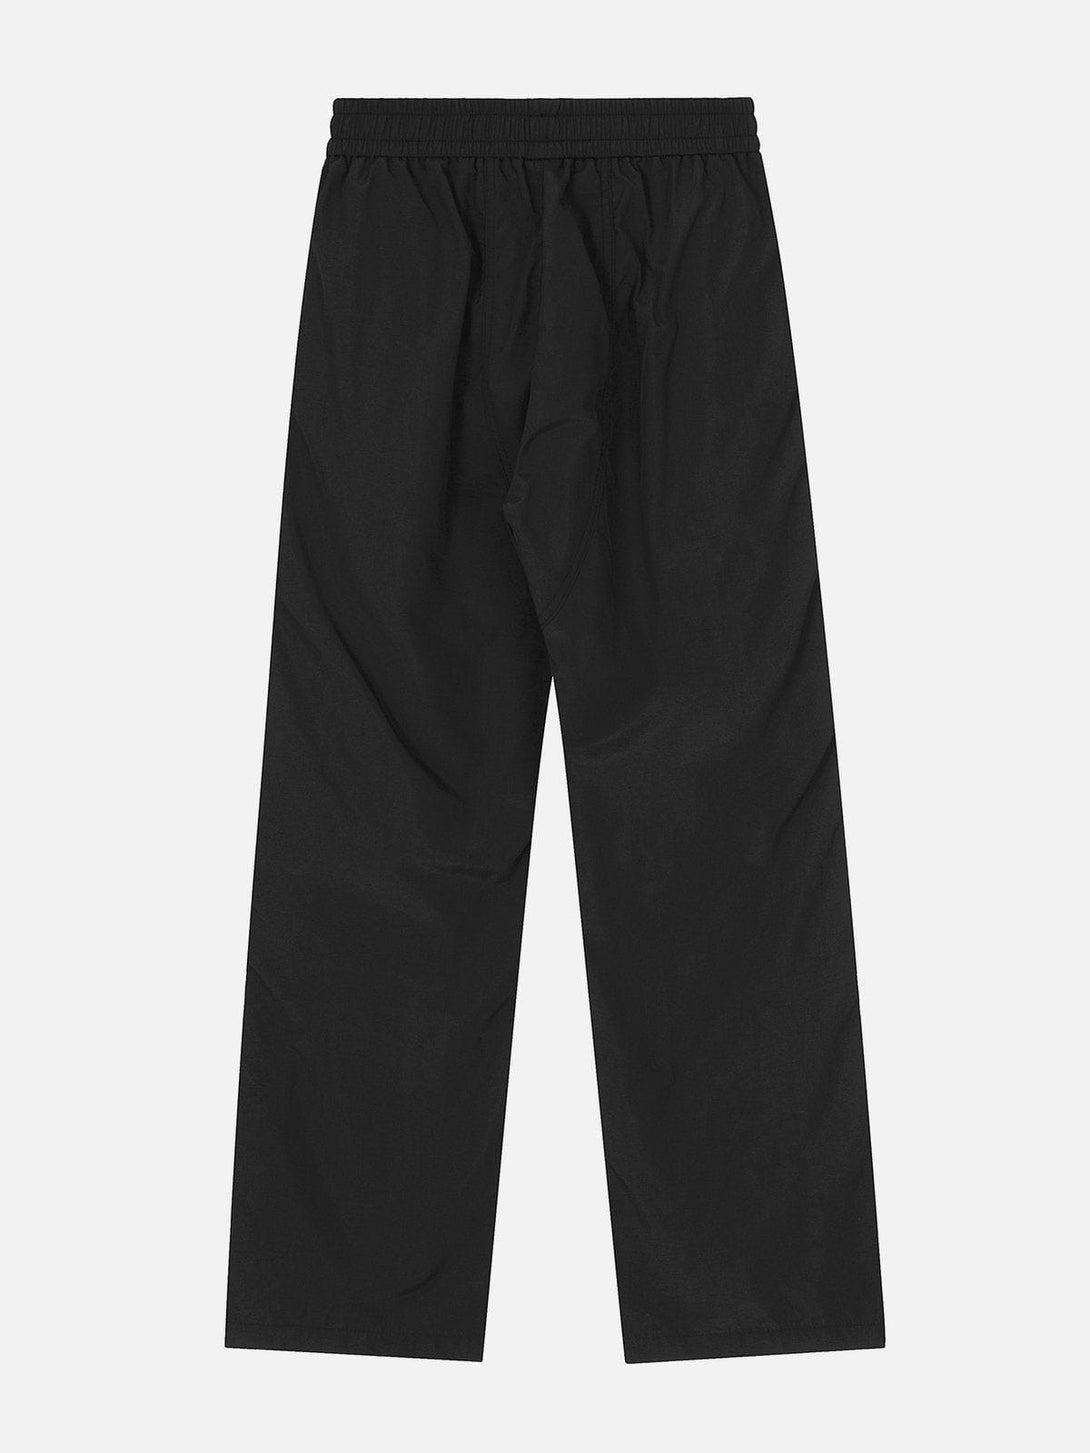 Levefly - Zipper Jeans - Streetwear Fashion - levefly.com